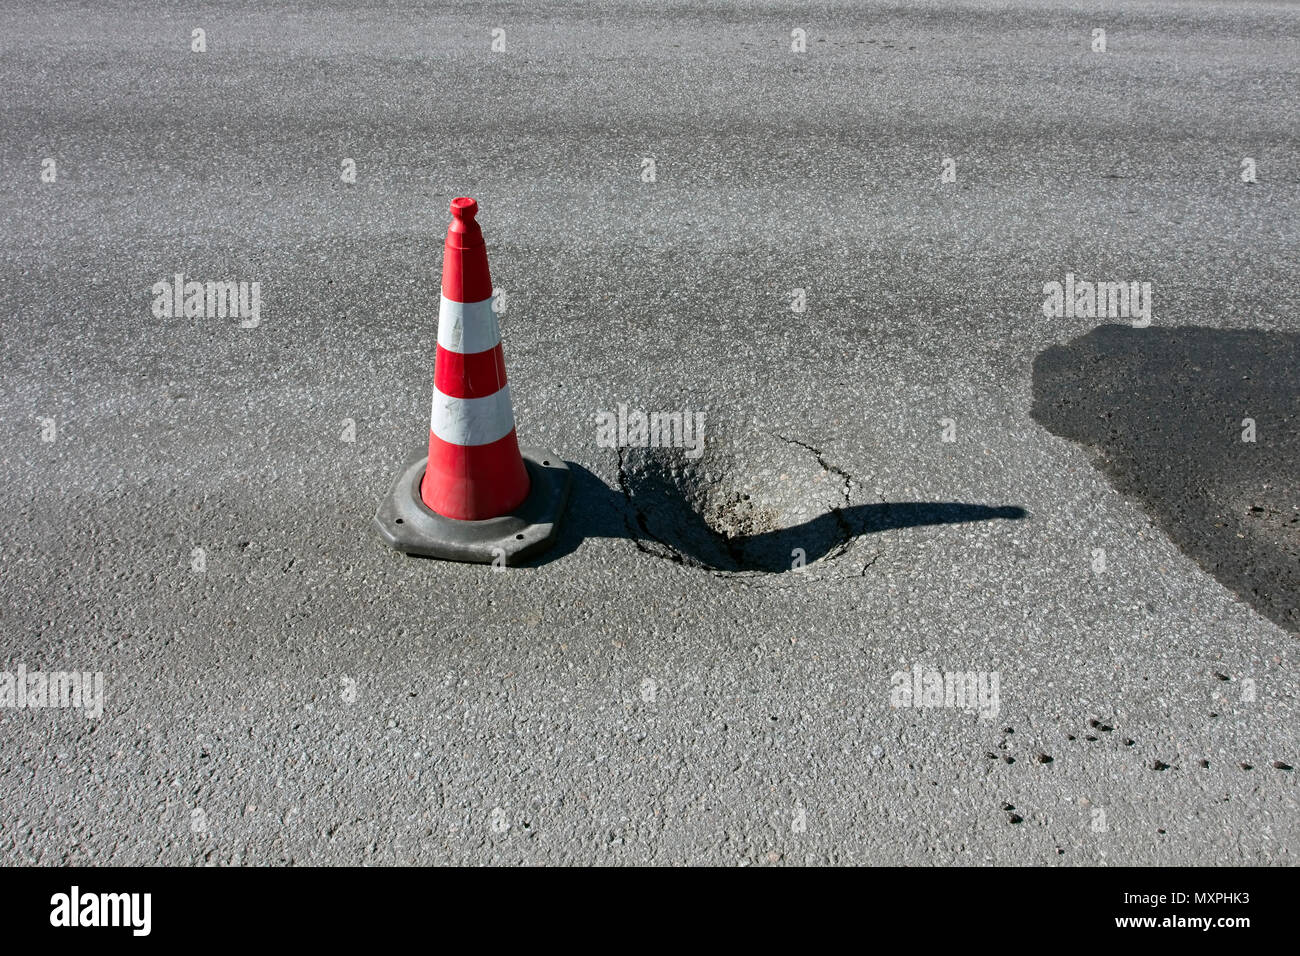 pothole damage with traffic cone on road Stock Photo